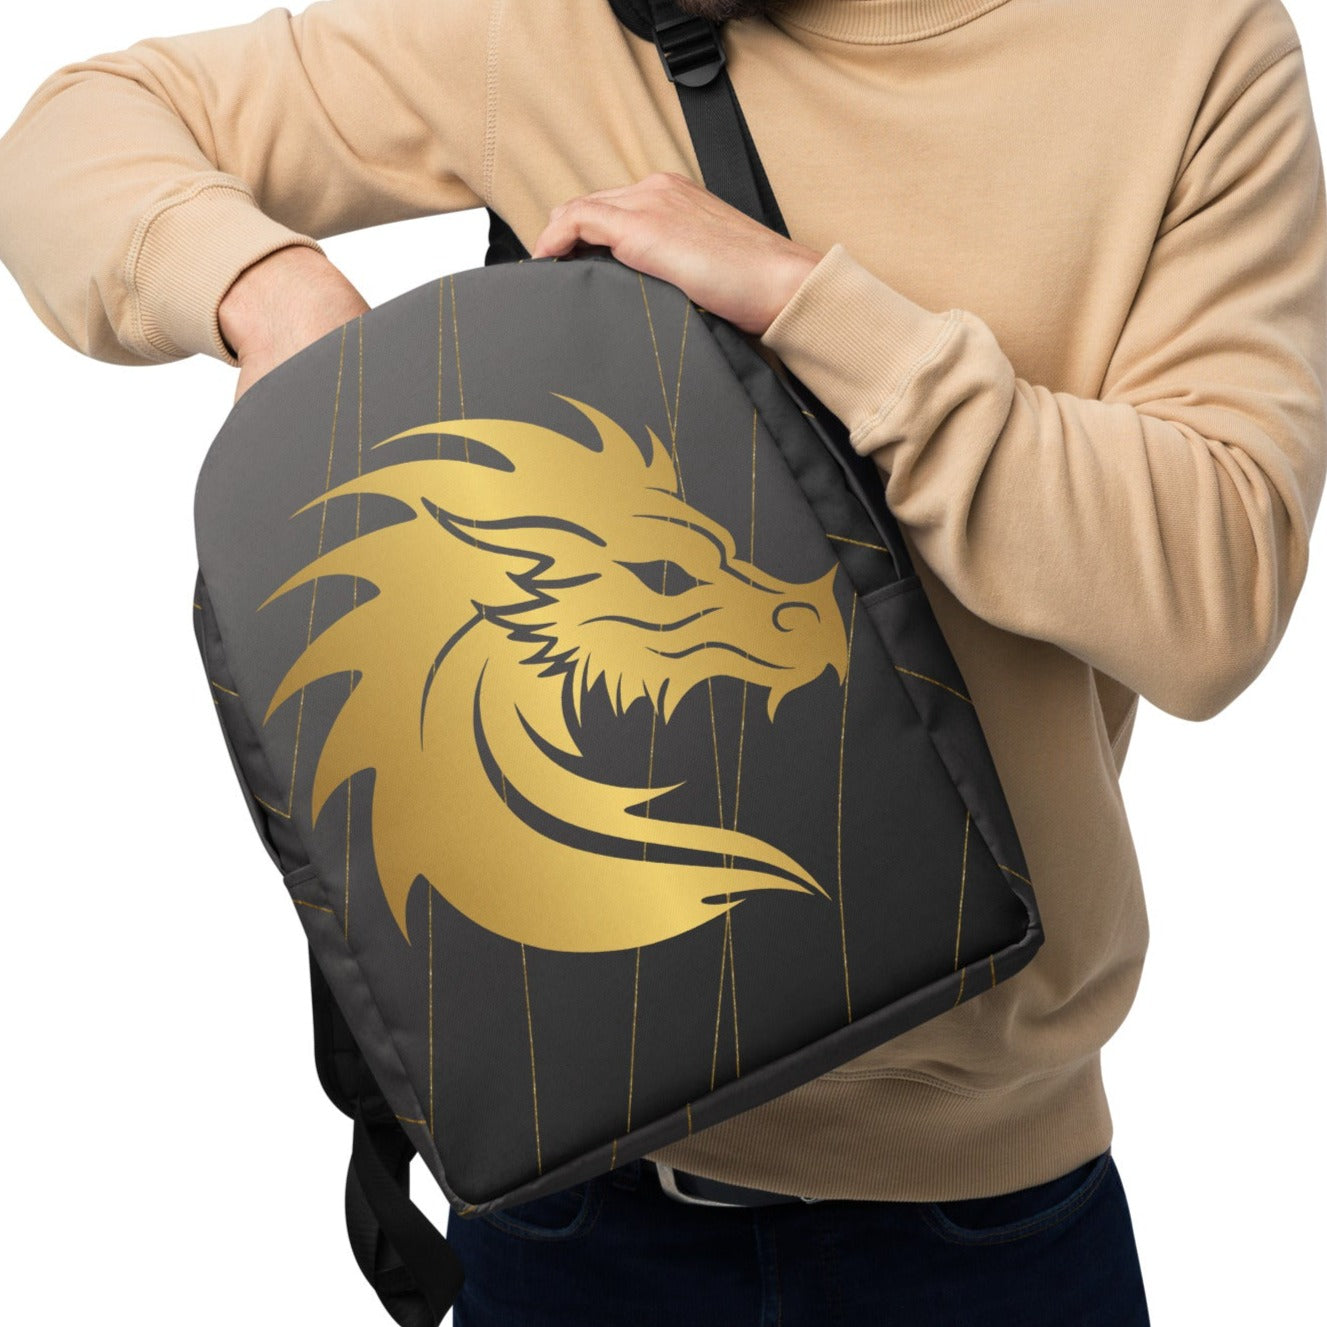 Minimalist Backpack Golden Dragon